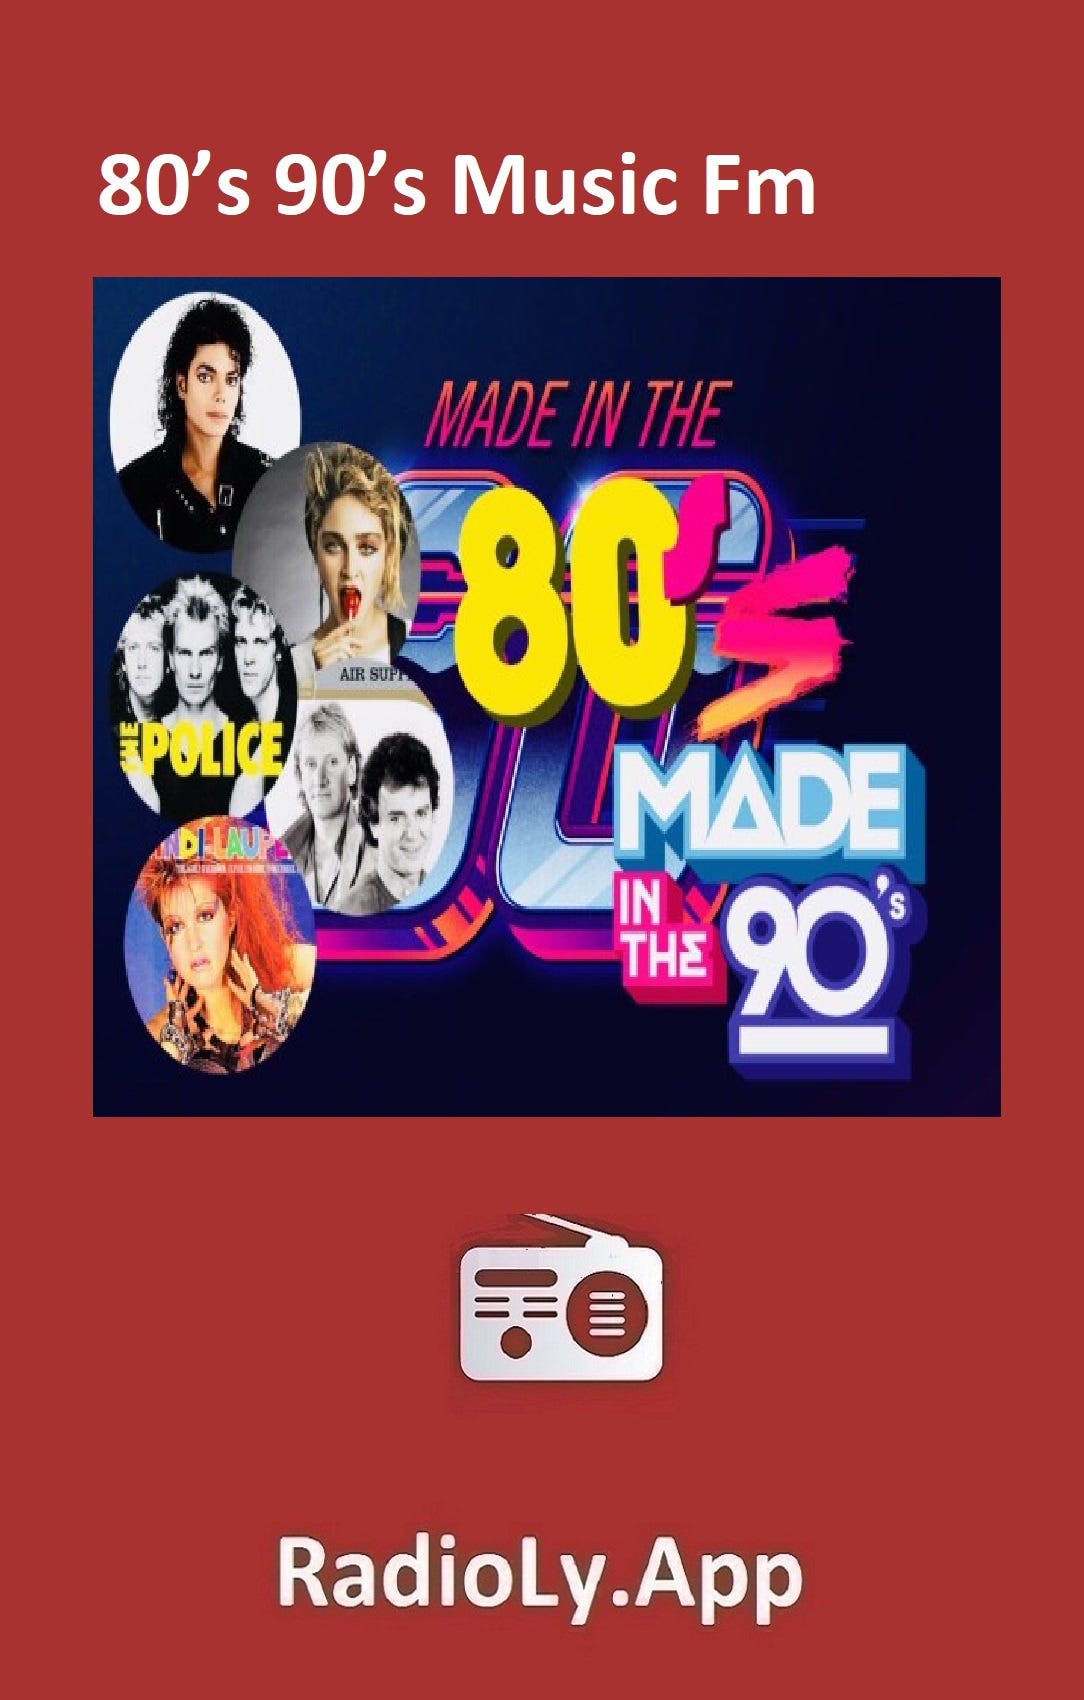 80's 90's Music Fm- USA Internet FM Radio Station Online — Radioly -  Radioly - Medium